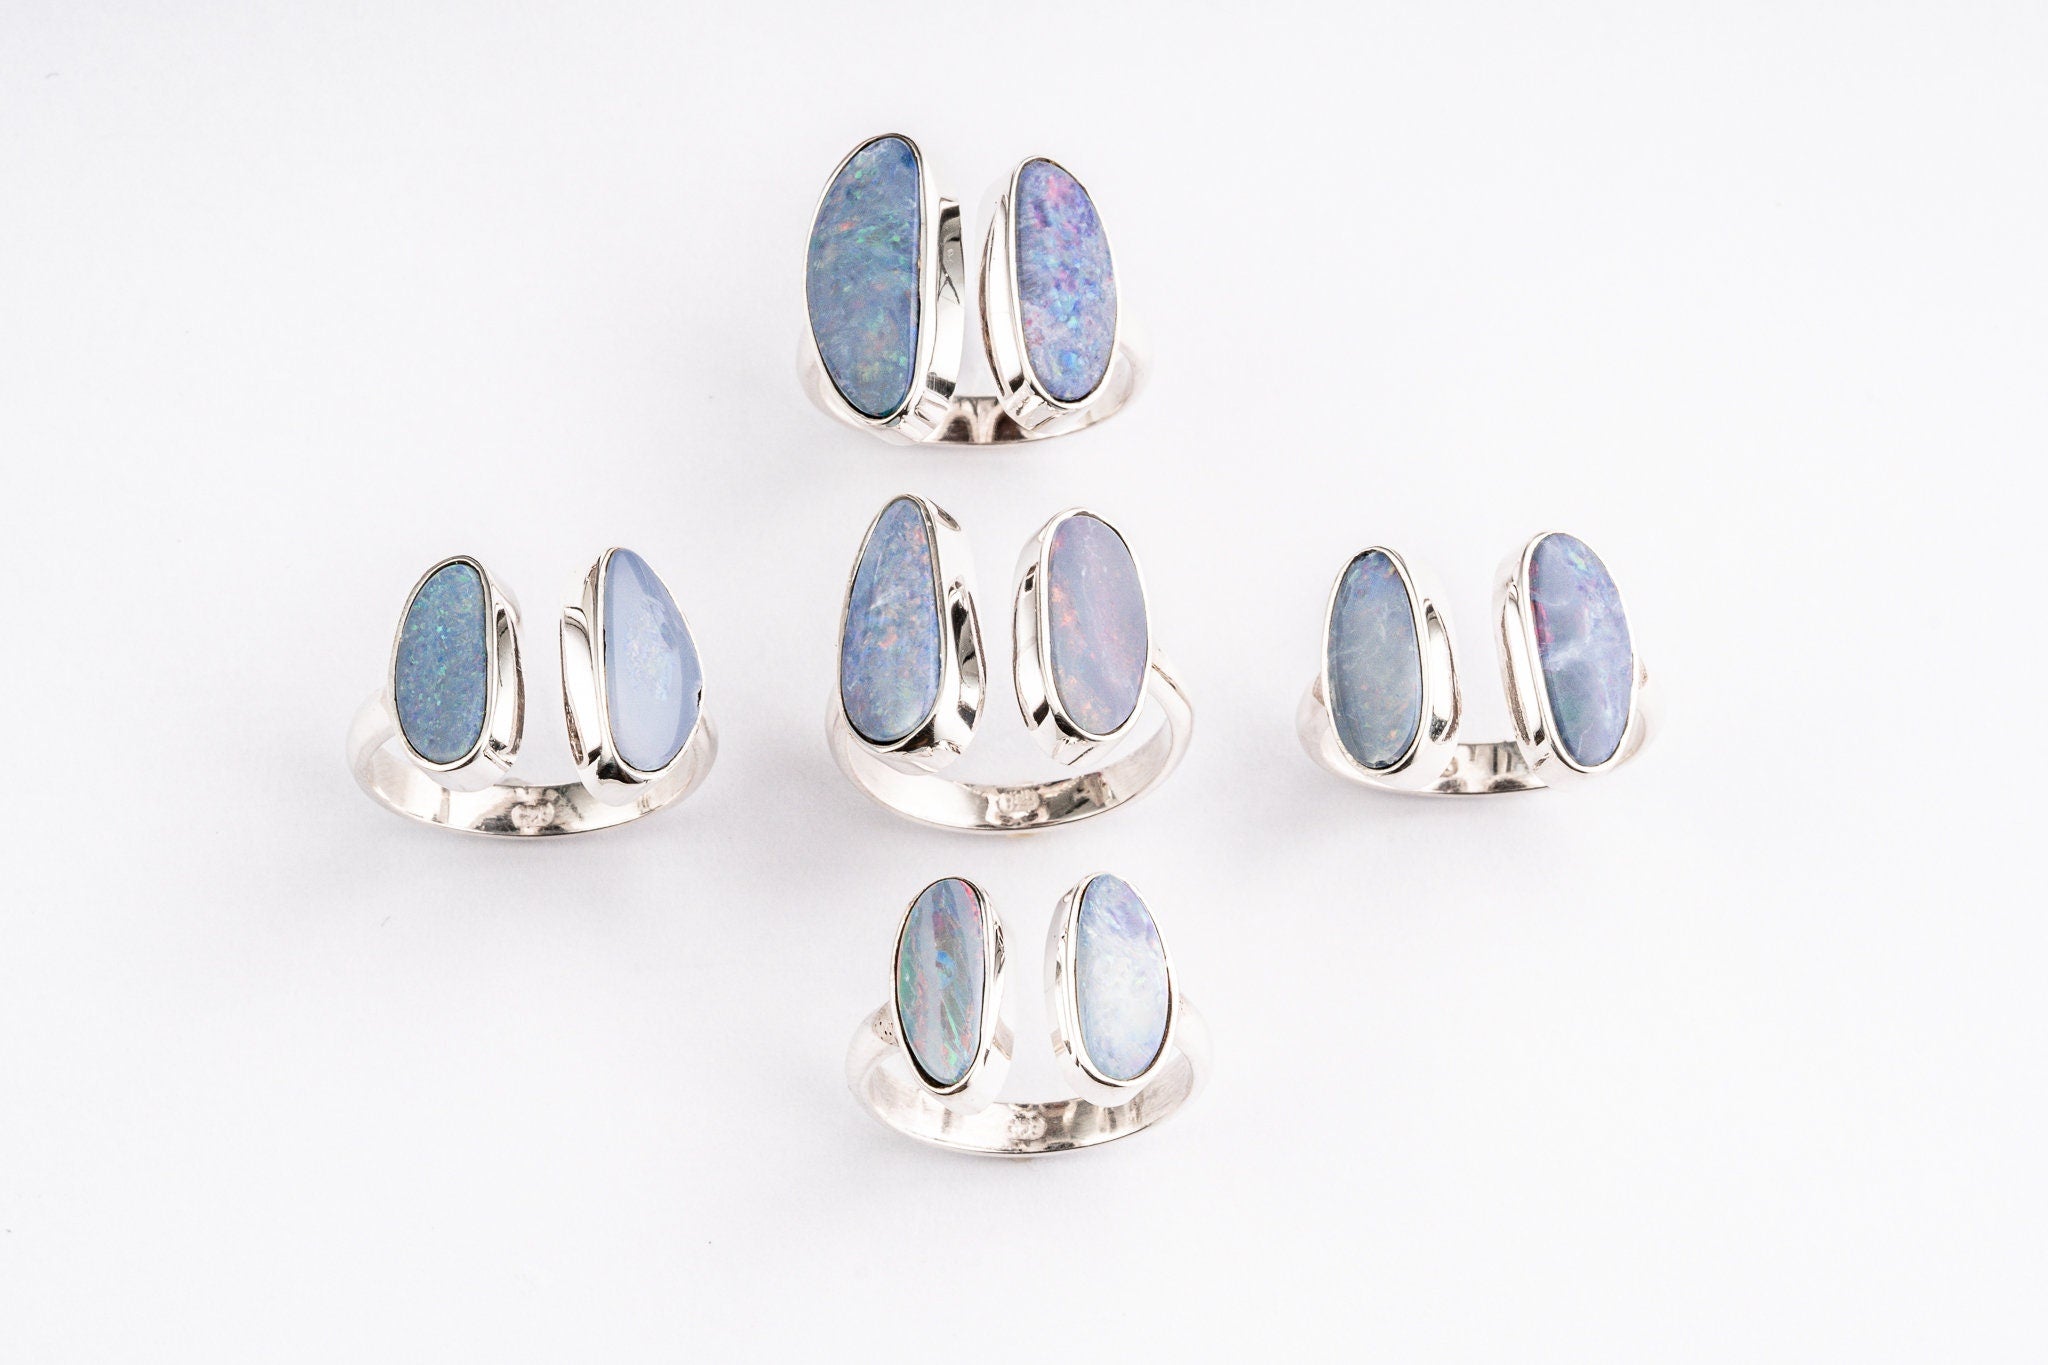 Australian Opal Doublet - Double Stone Open Ring - Adjustable Size 5-9 US - 925 Sterling Silver